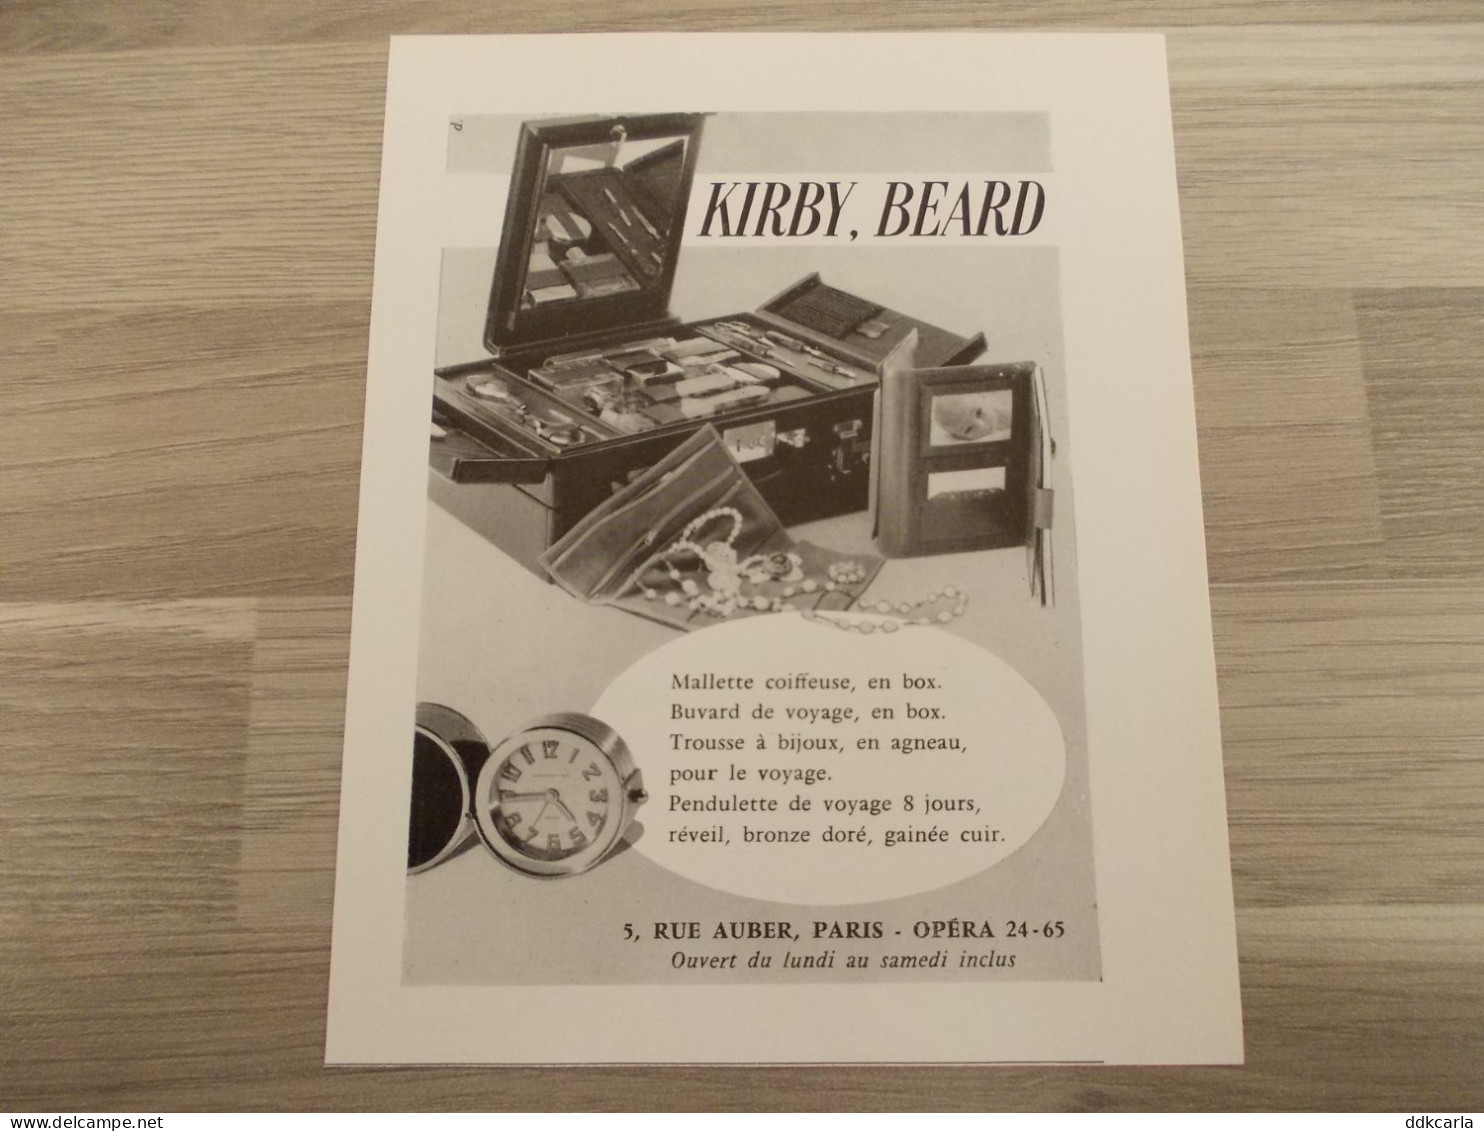 Reclame Advertentie Uit Oud Tijdschrift 1957 - Kirby, Beard - Mallette Coiffeuse, En Box - Advertising